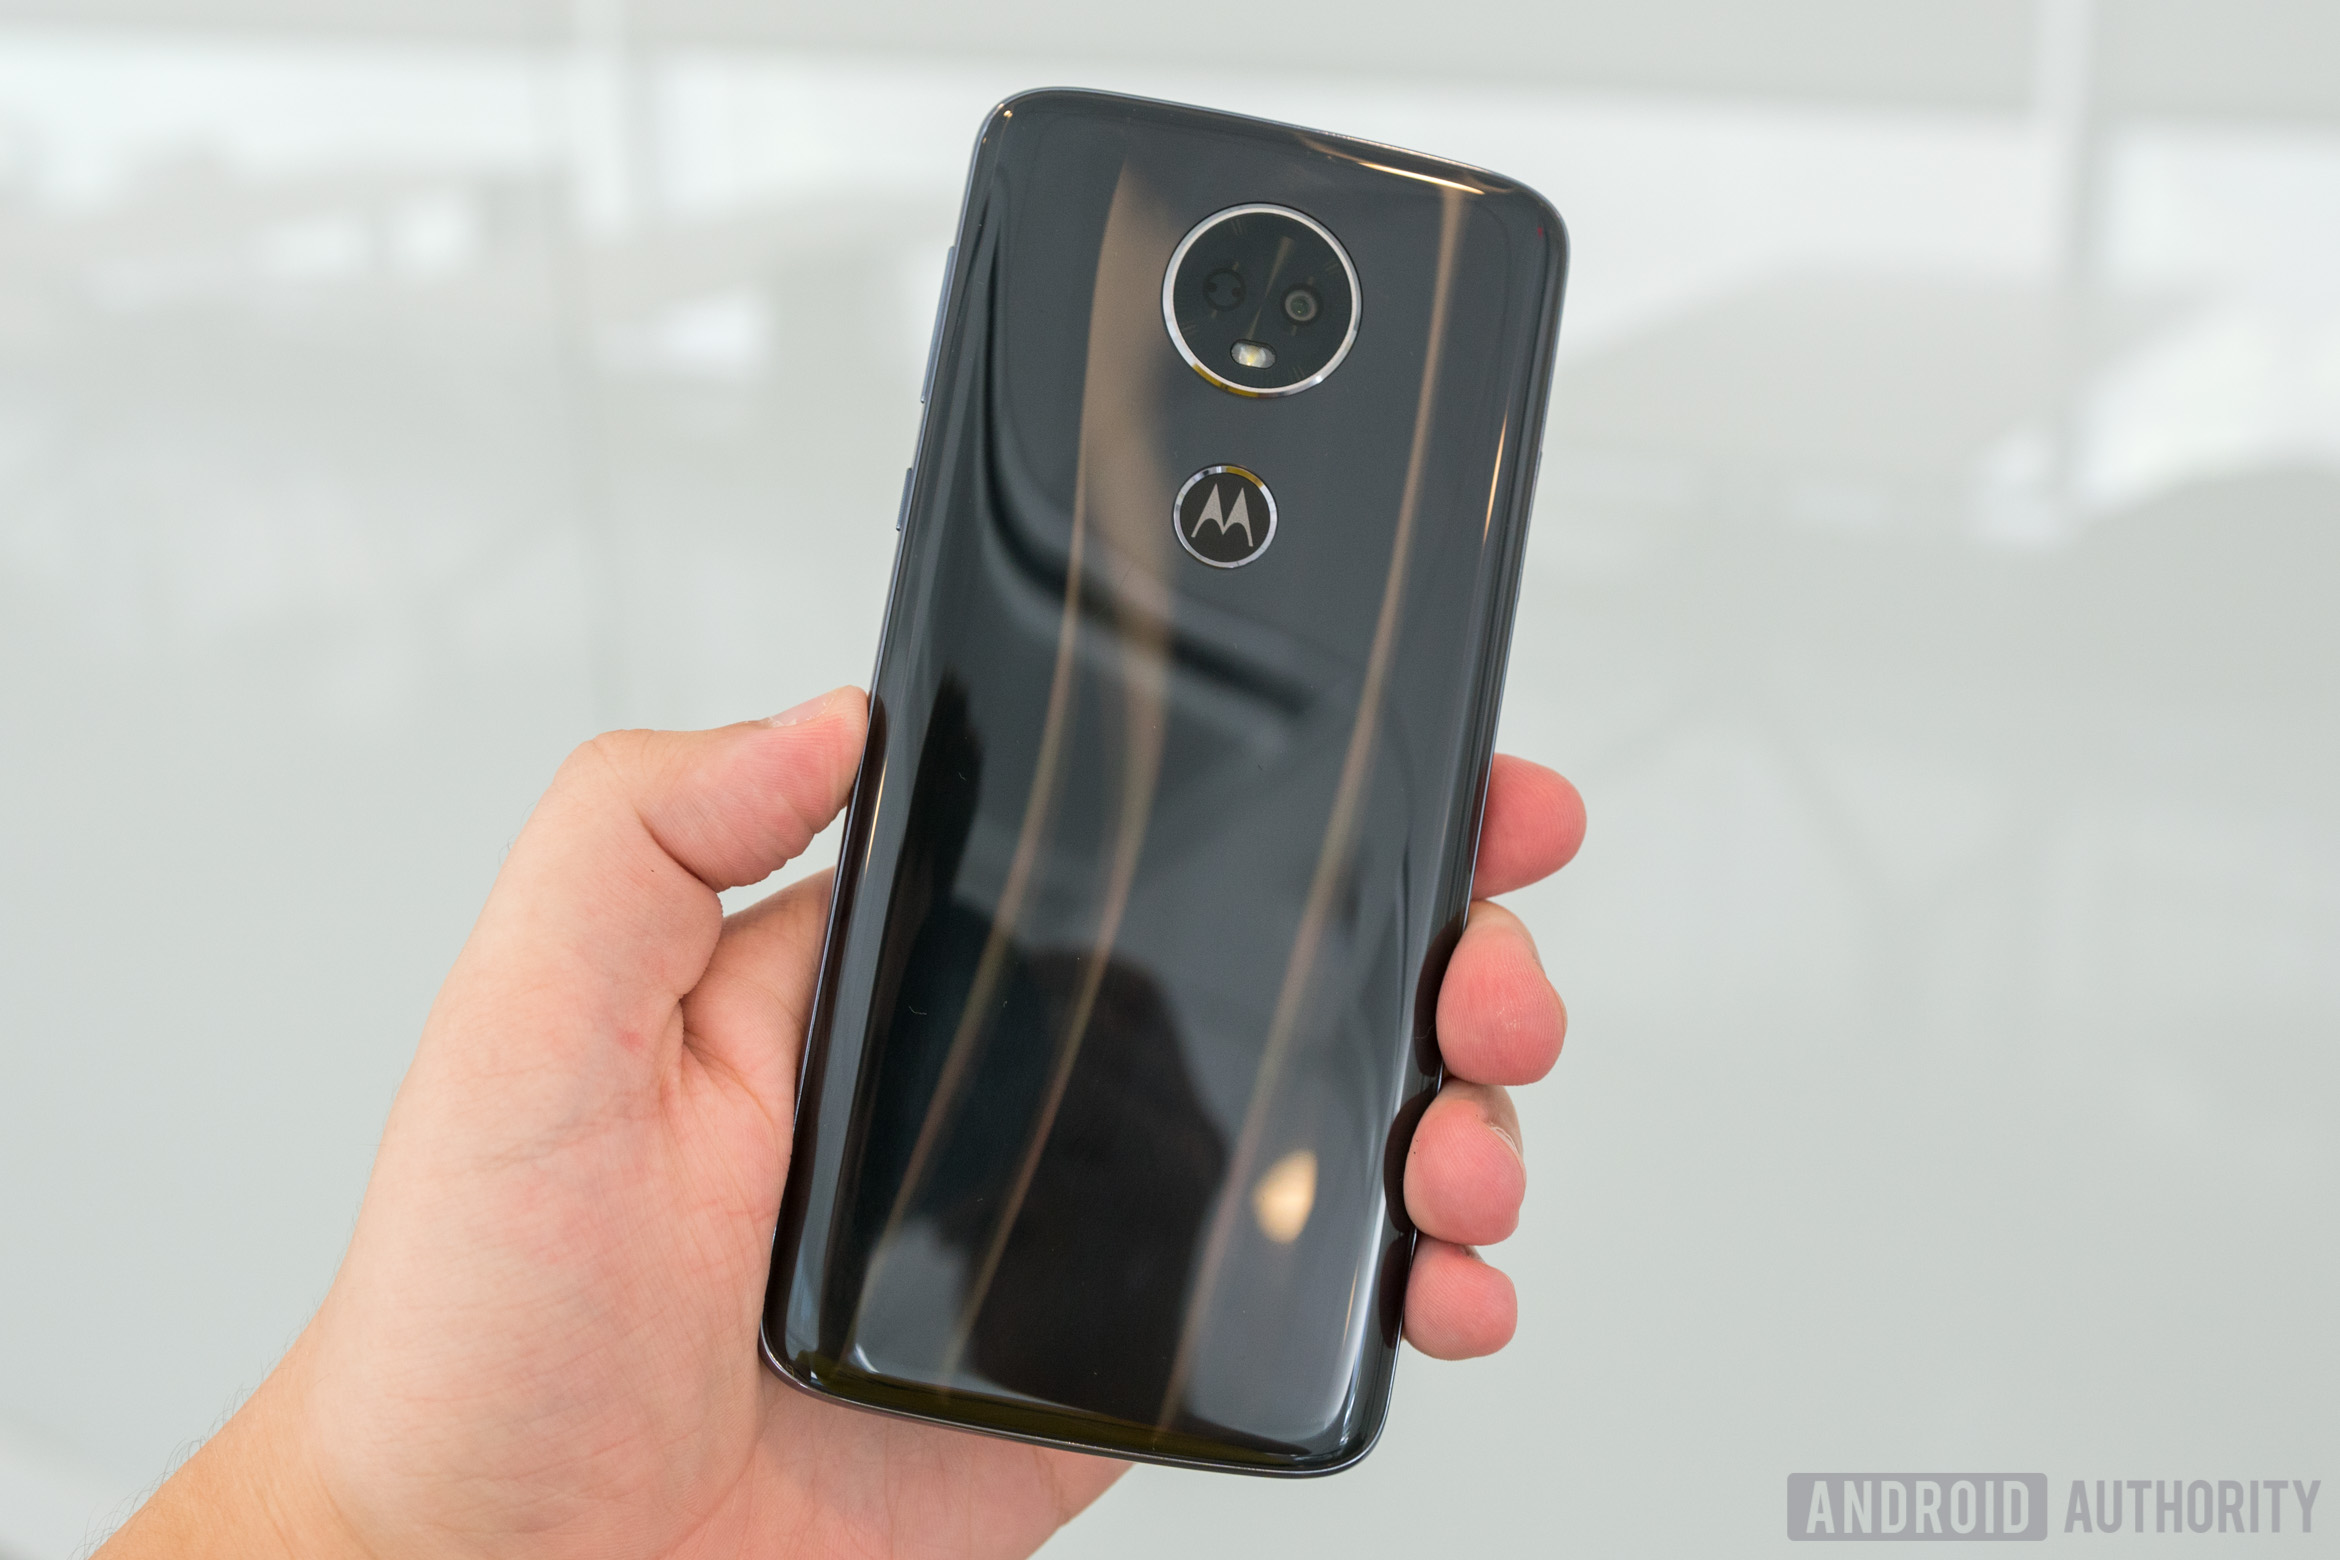 Motorola Moto E5 Plus Light Refracting Design In Hand, Moto E5 Plus review